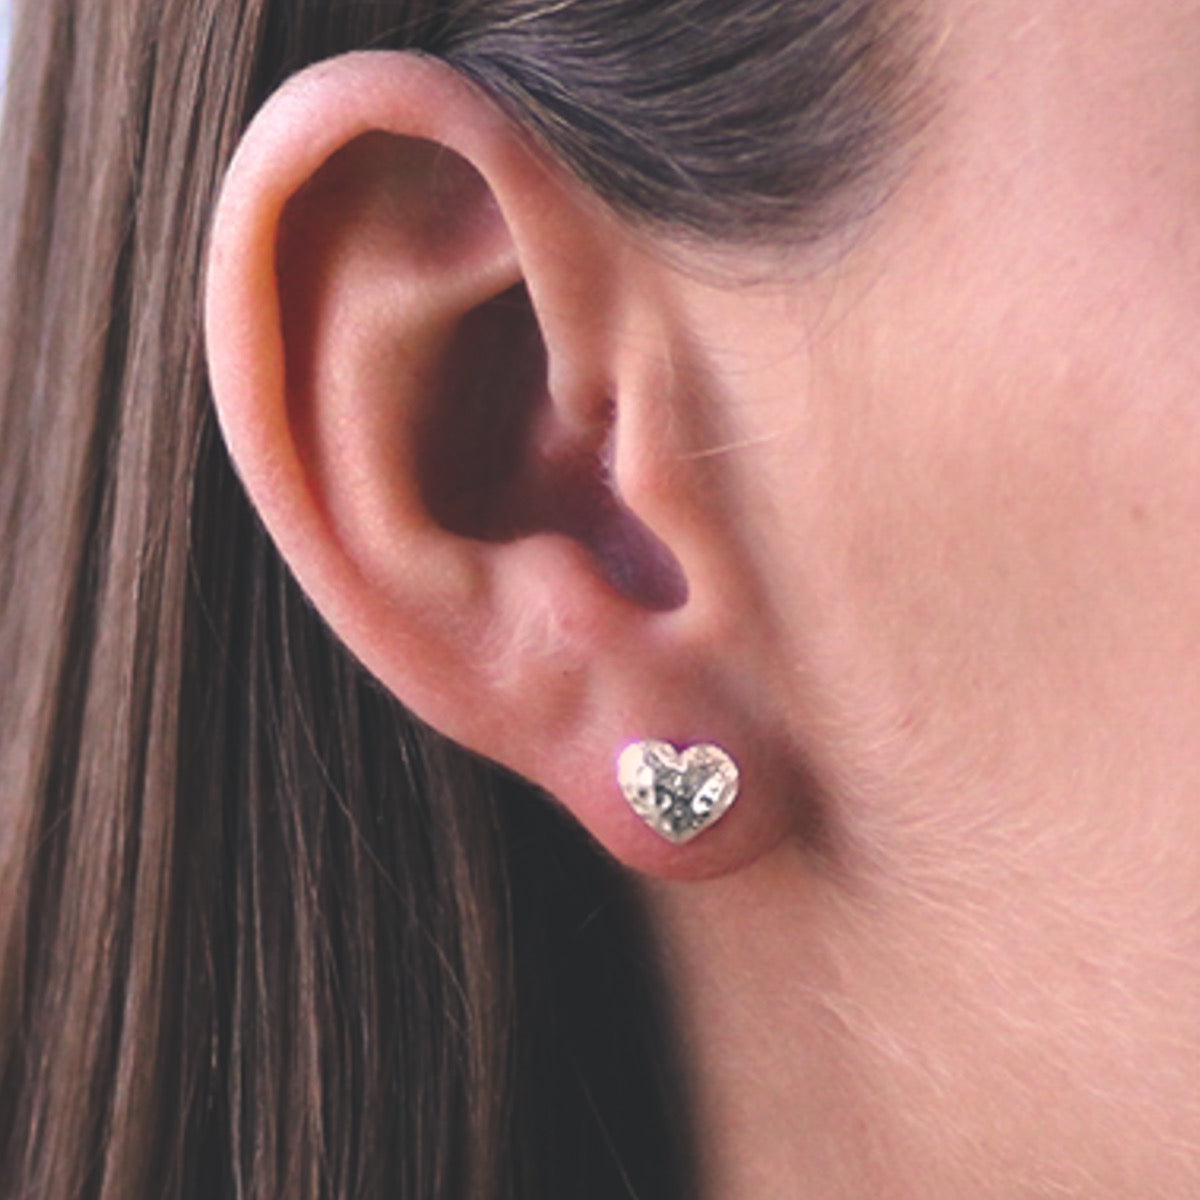 Silver hammered heart earrings